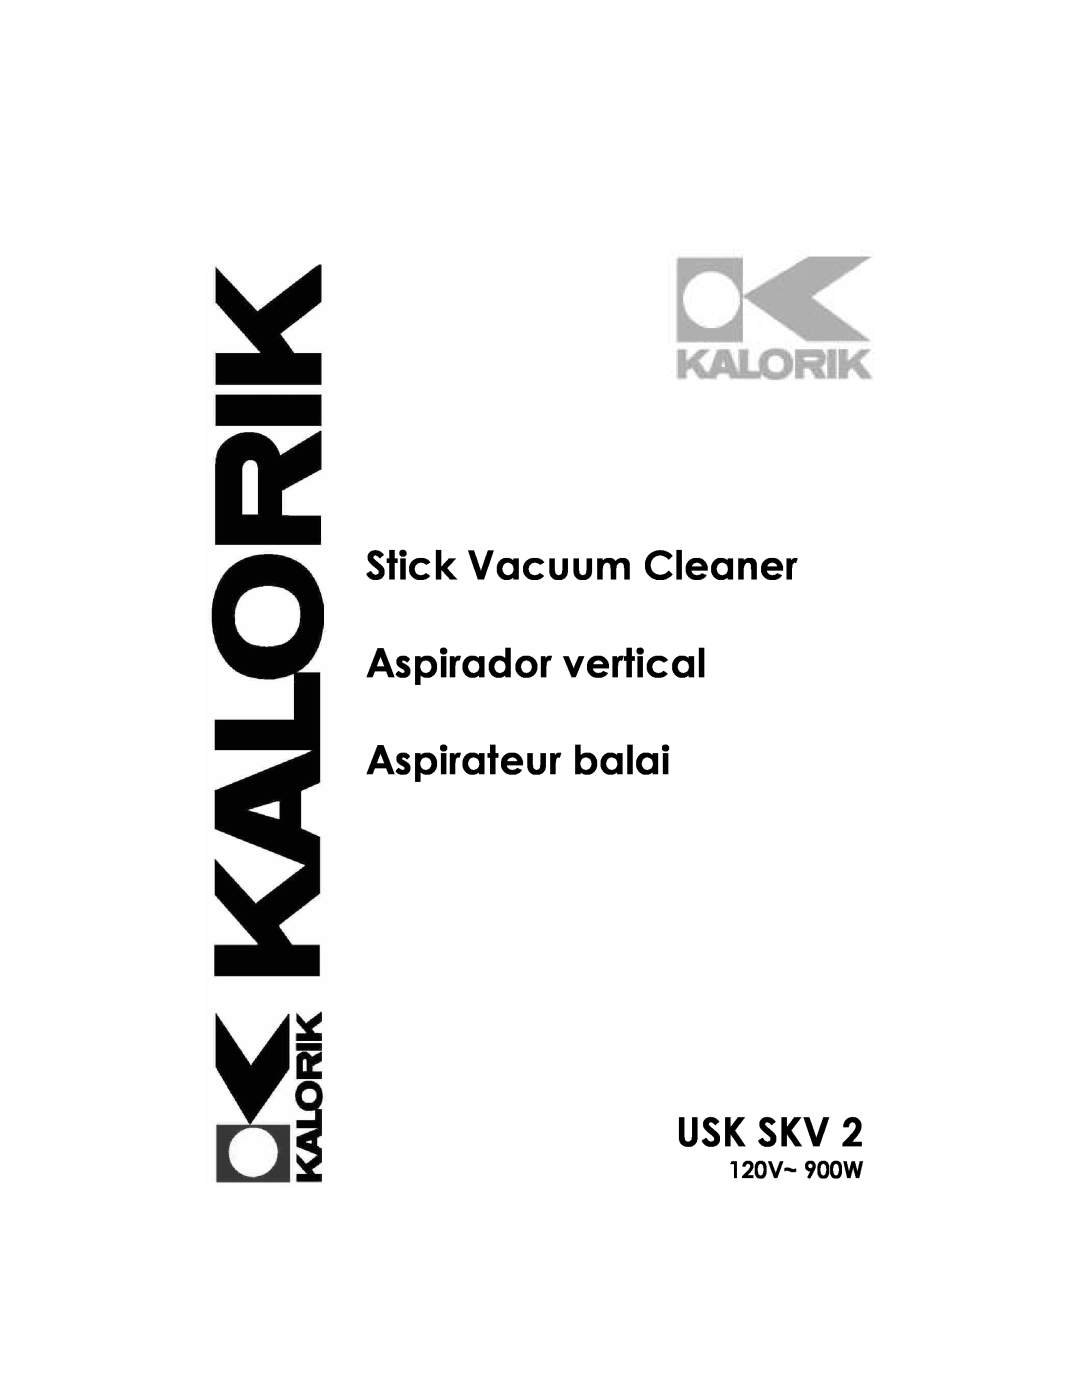 Kalorik USK SKV 2 manual Stick Vacuum Cleaner Aspirador vertical, Aspirateur balai USK SKV, 120V~ 900W 